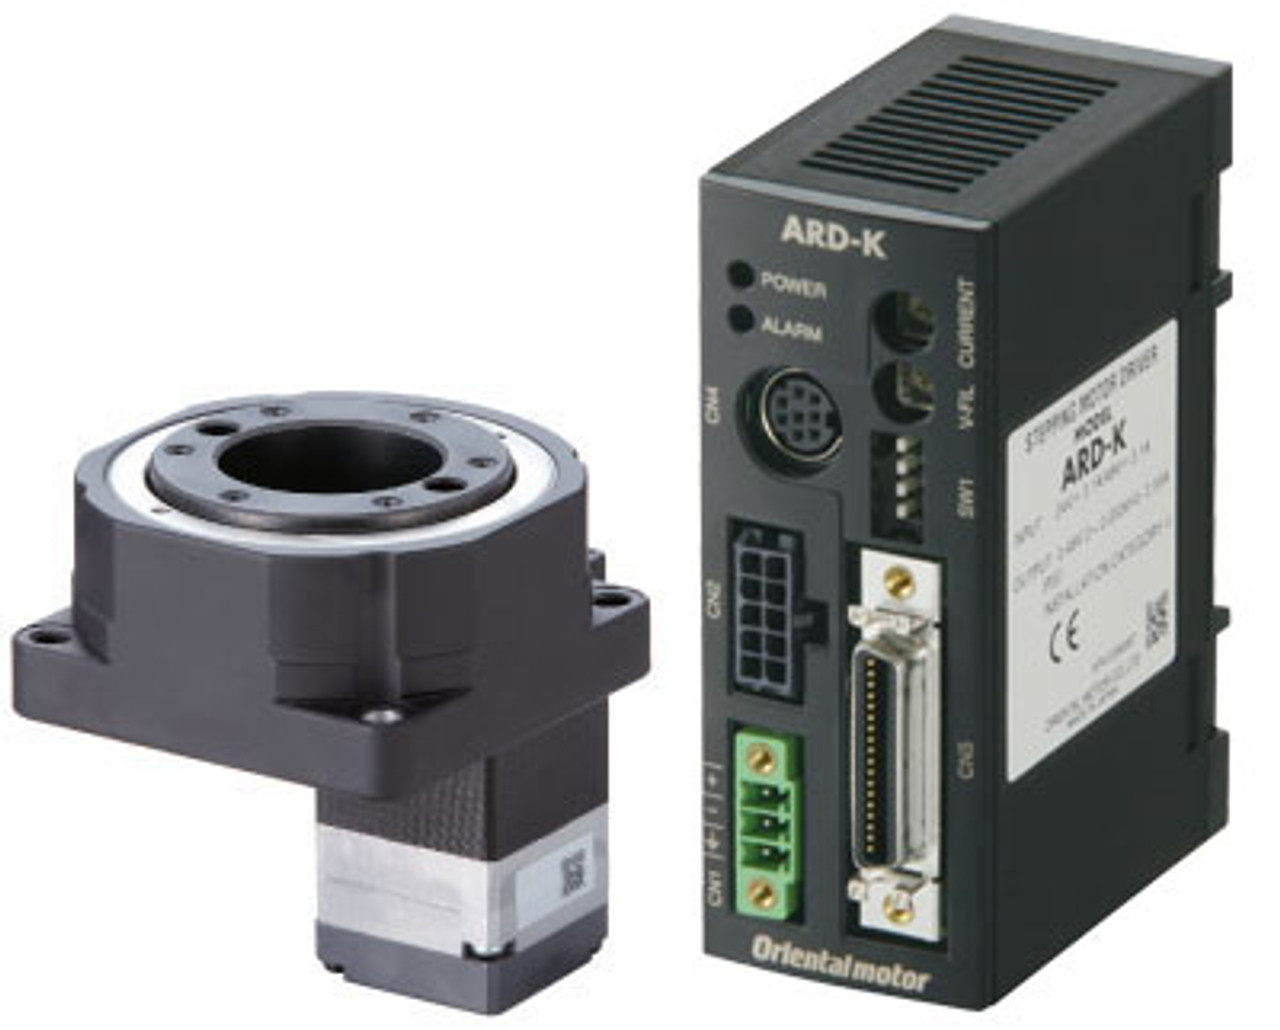 DGM60-ARBK / ARD-K - Product Image